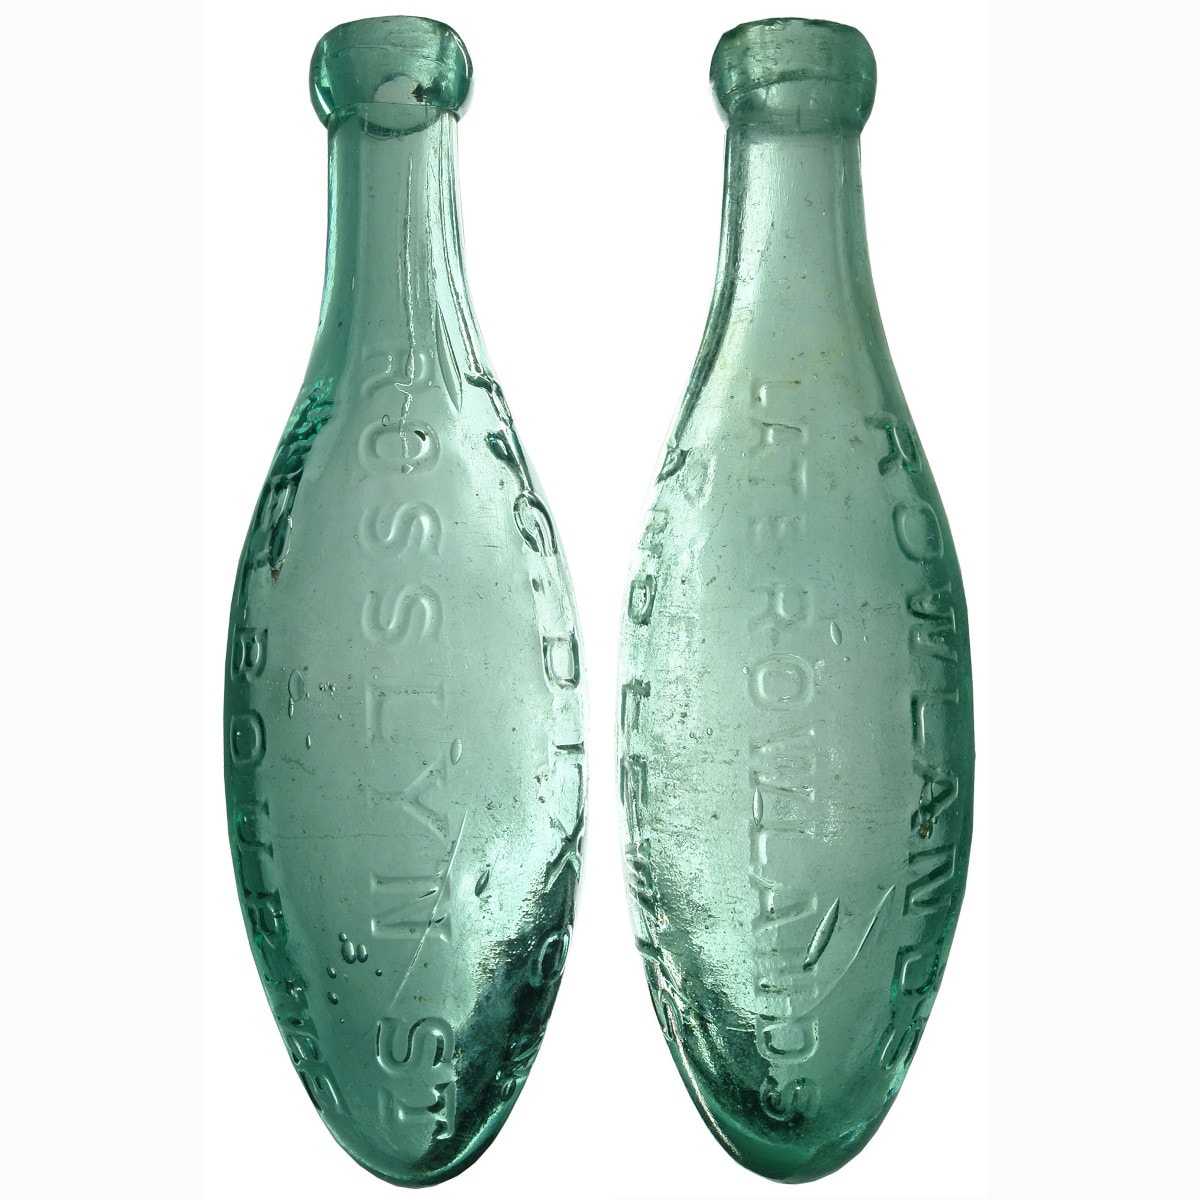 Pair of Torpedo bottles. P. G. Dixon, Melbourne, and Rowlands, Ballarat and Melbourne.